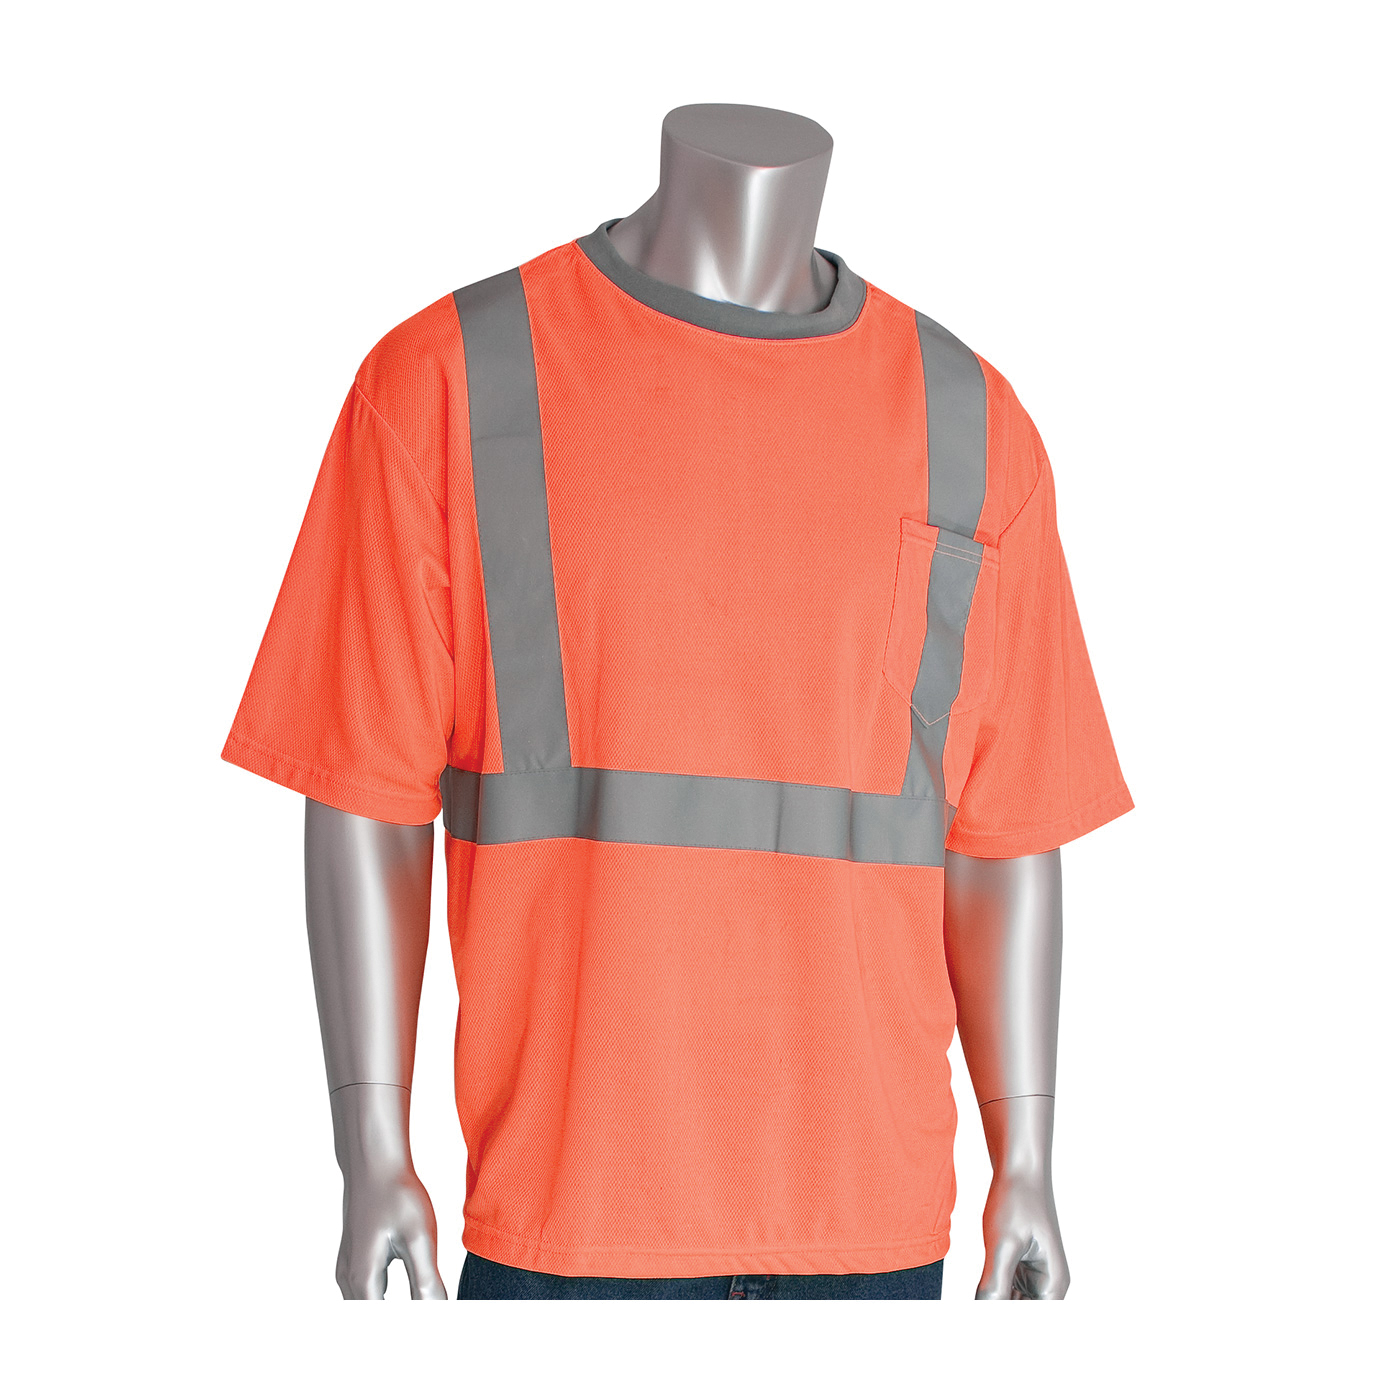 PIP® 312-1200-OR/S Short Sleeve Crew Neck T-Shirt With Reflective, S, Hi-Viz Orange, Bird's Eye Polyester, 27-1/2 in L